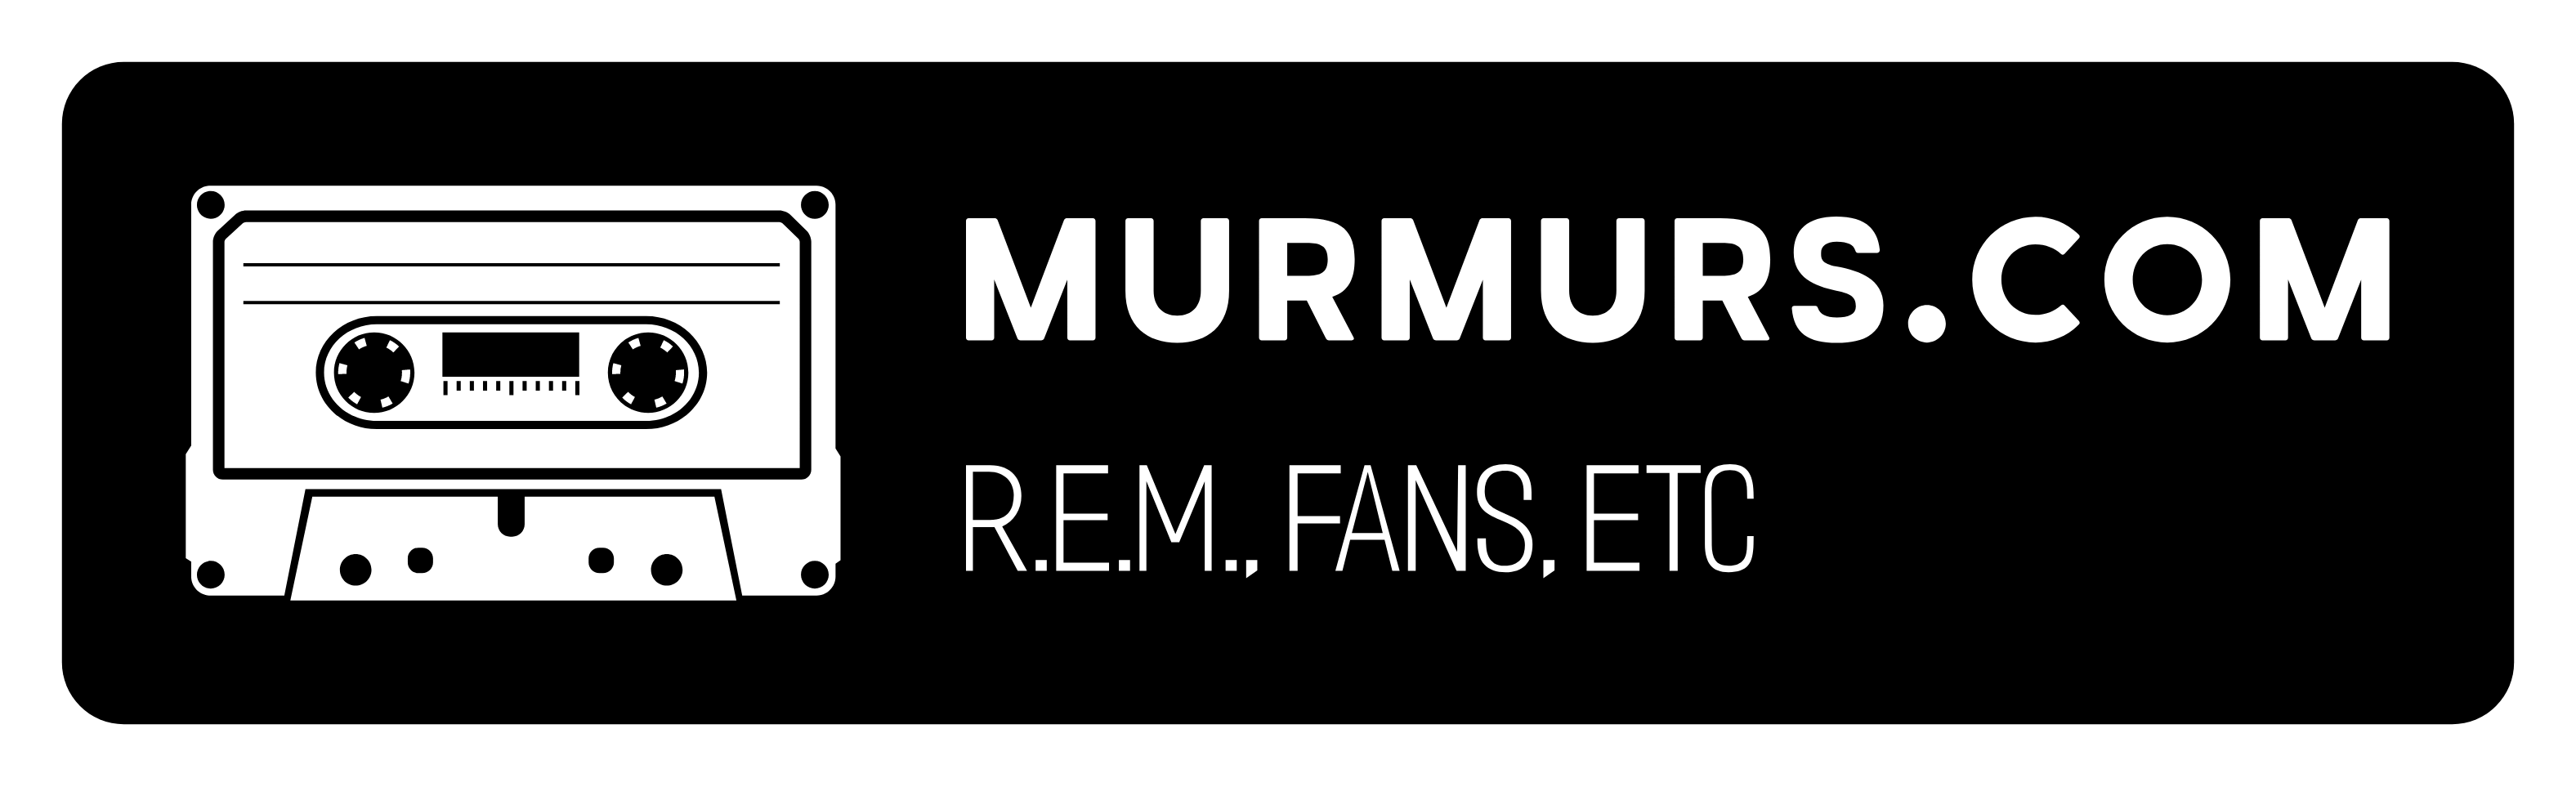 Murmurs.com